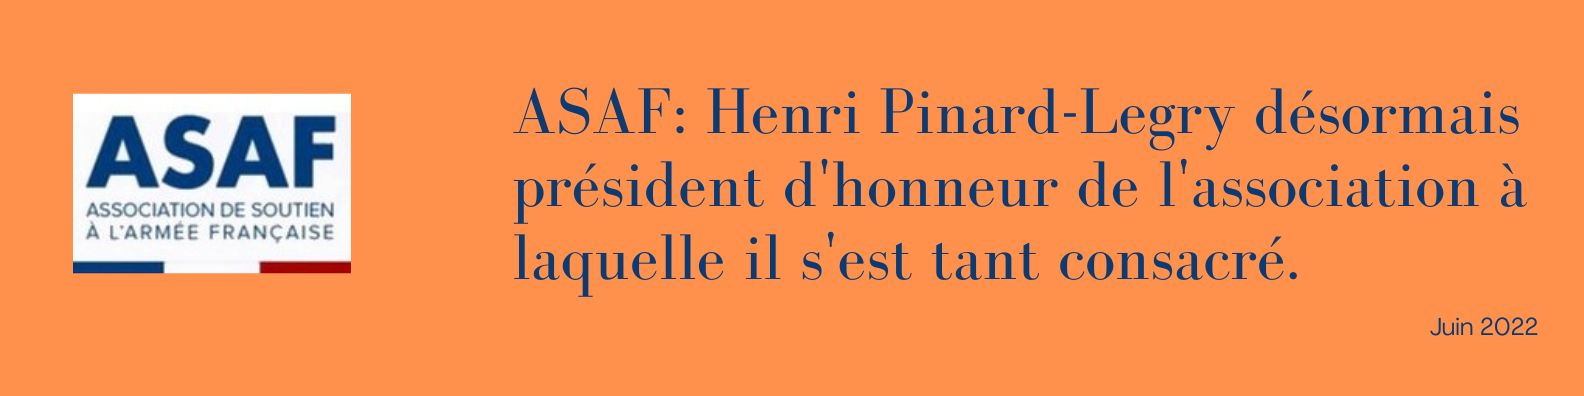 banniere-General-pinard-legry-president-d-honneur-de-l-asaf